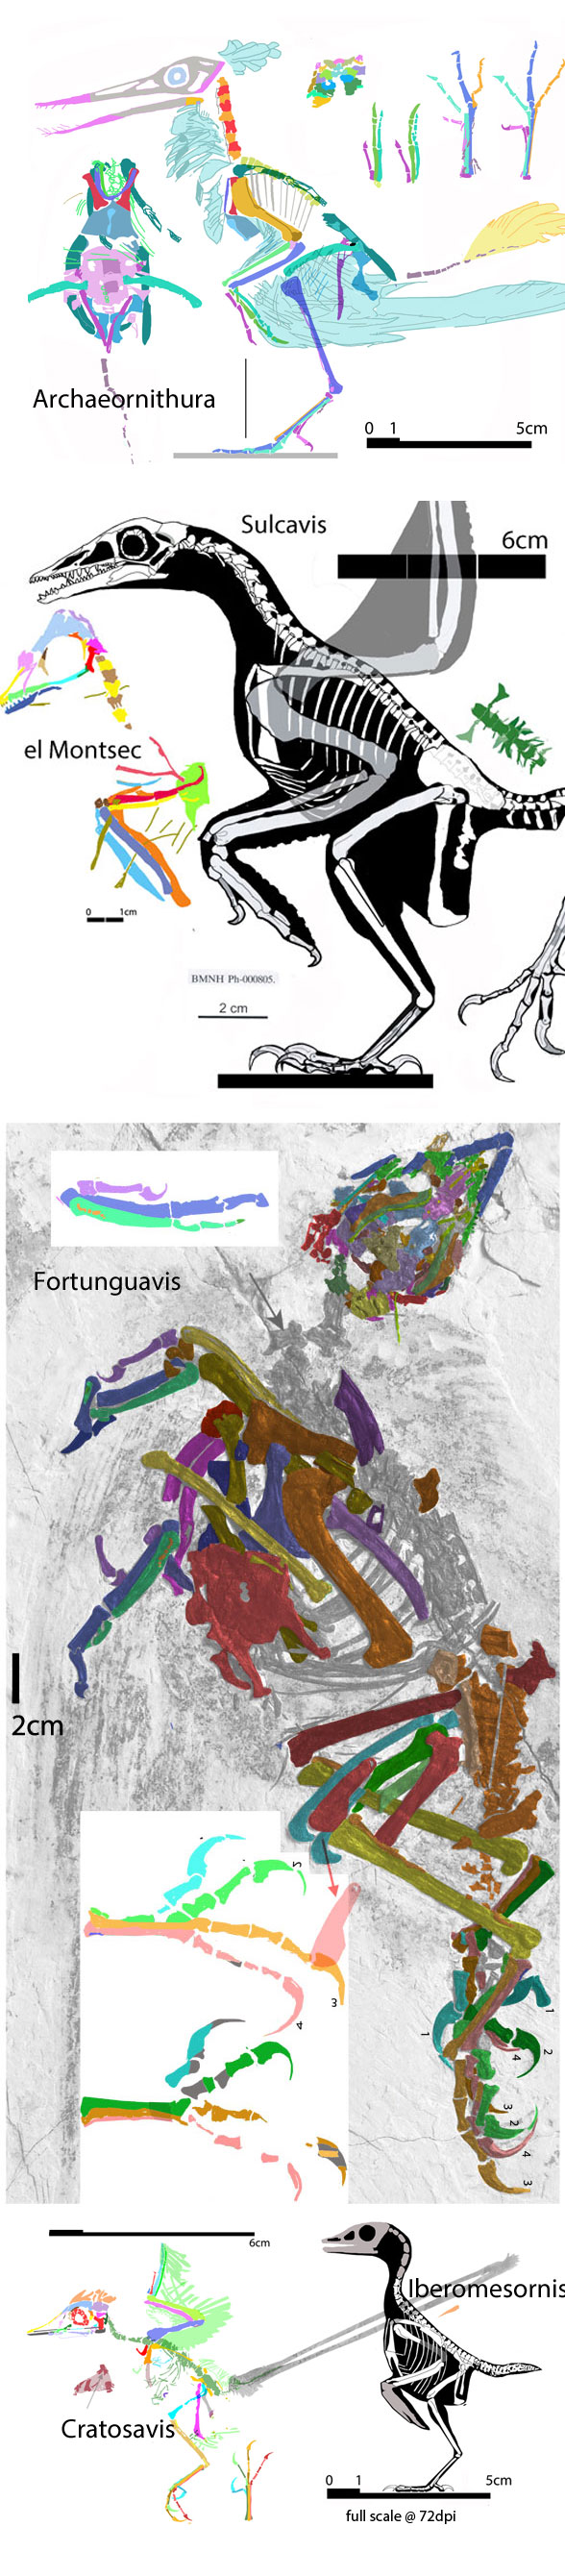 Figure 3. Sulcavis and the el Montsec bird to scale with Archaeornithura, Iberomesornis, Fortunguavis and Cratoavis. 